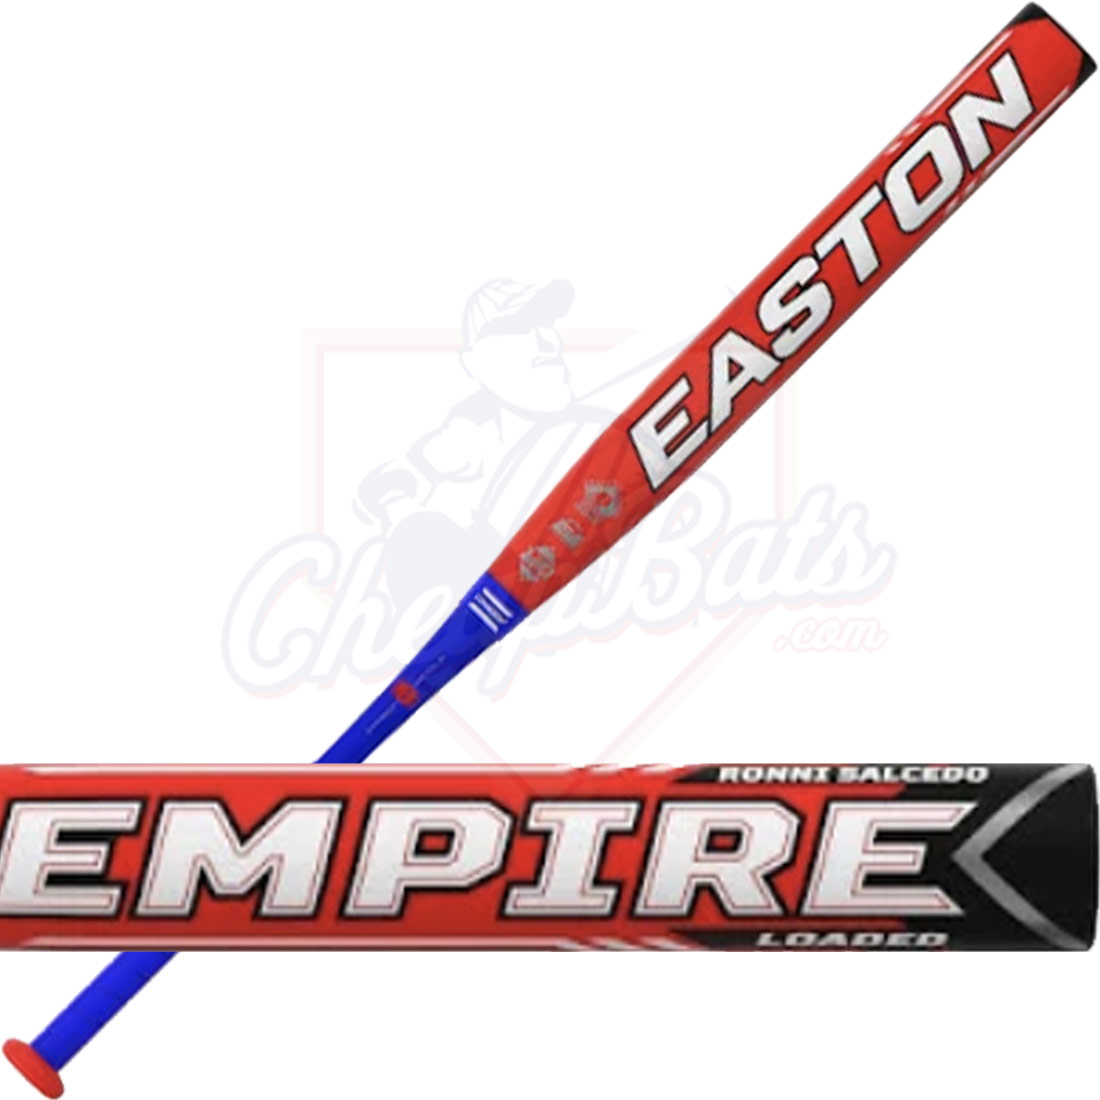 2022 Easton Empire Senior slowpitch Softball Bat chargé ssusa Ron SALCEDO Modèle 